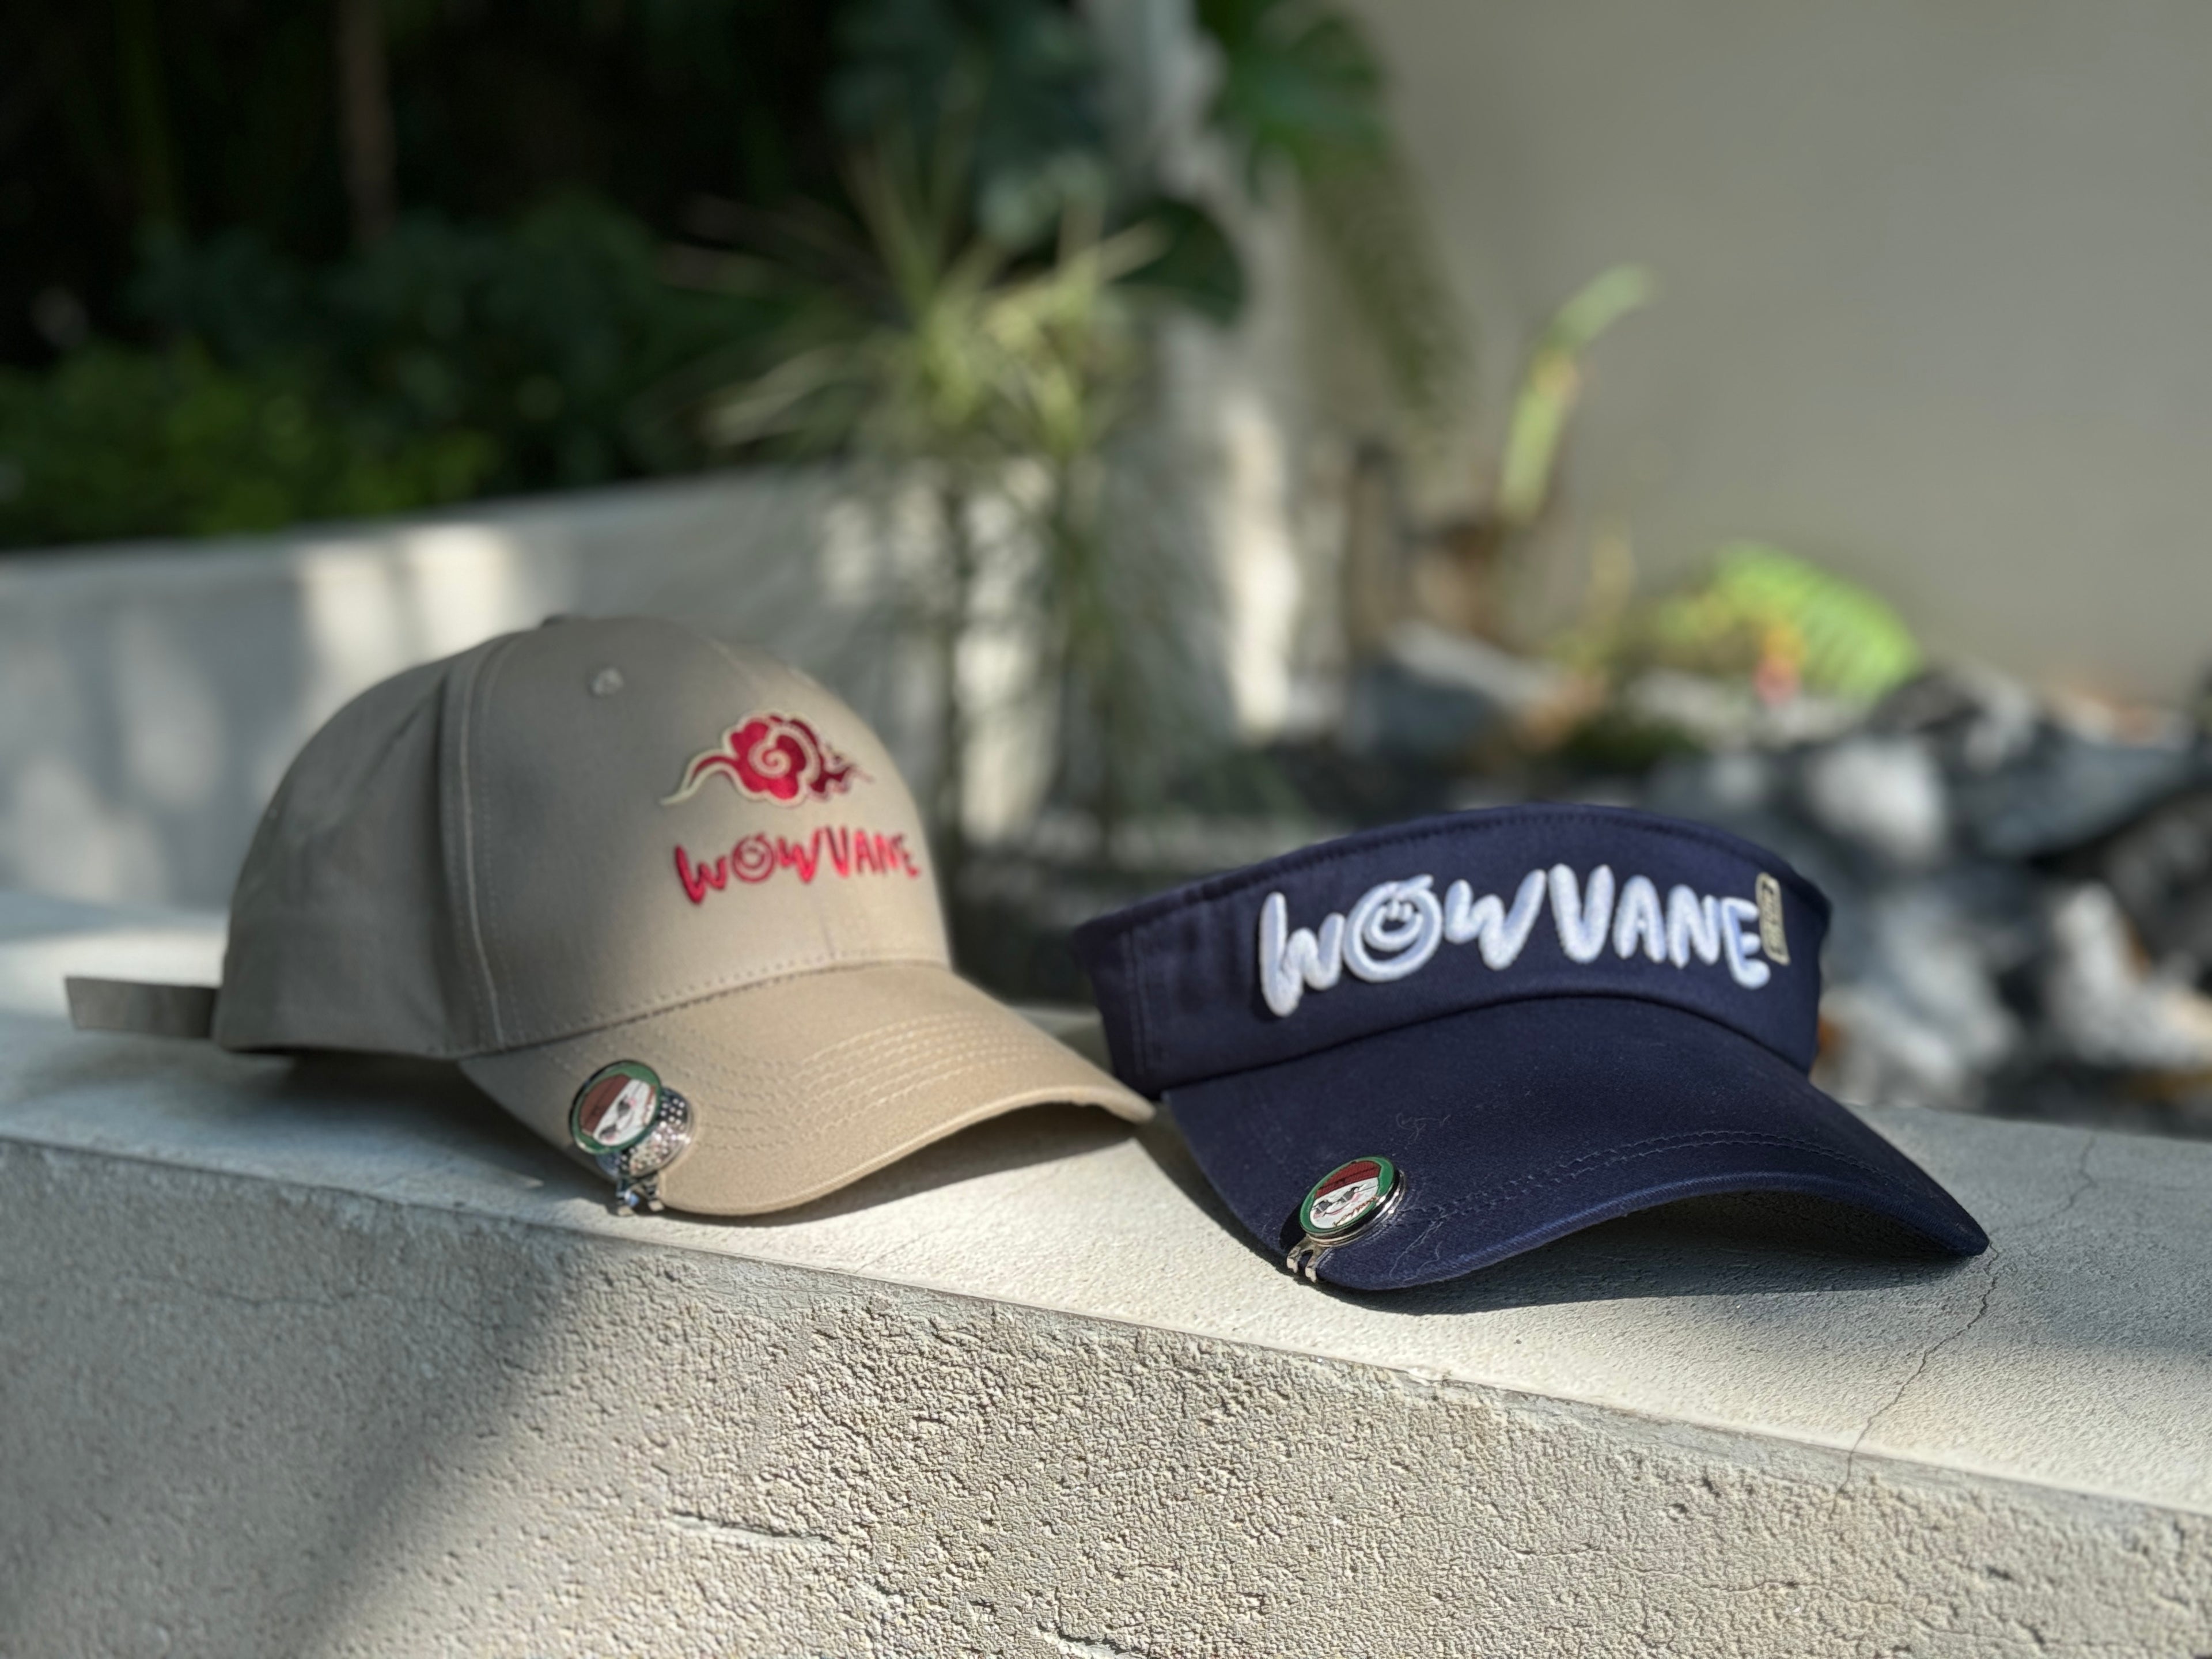 WOWVANE GOLF HAT——Original Golf Cap Unisex Sports Cap Baseball Cap Sun Hat Adjustable